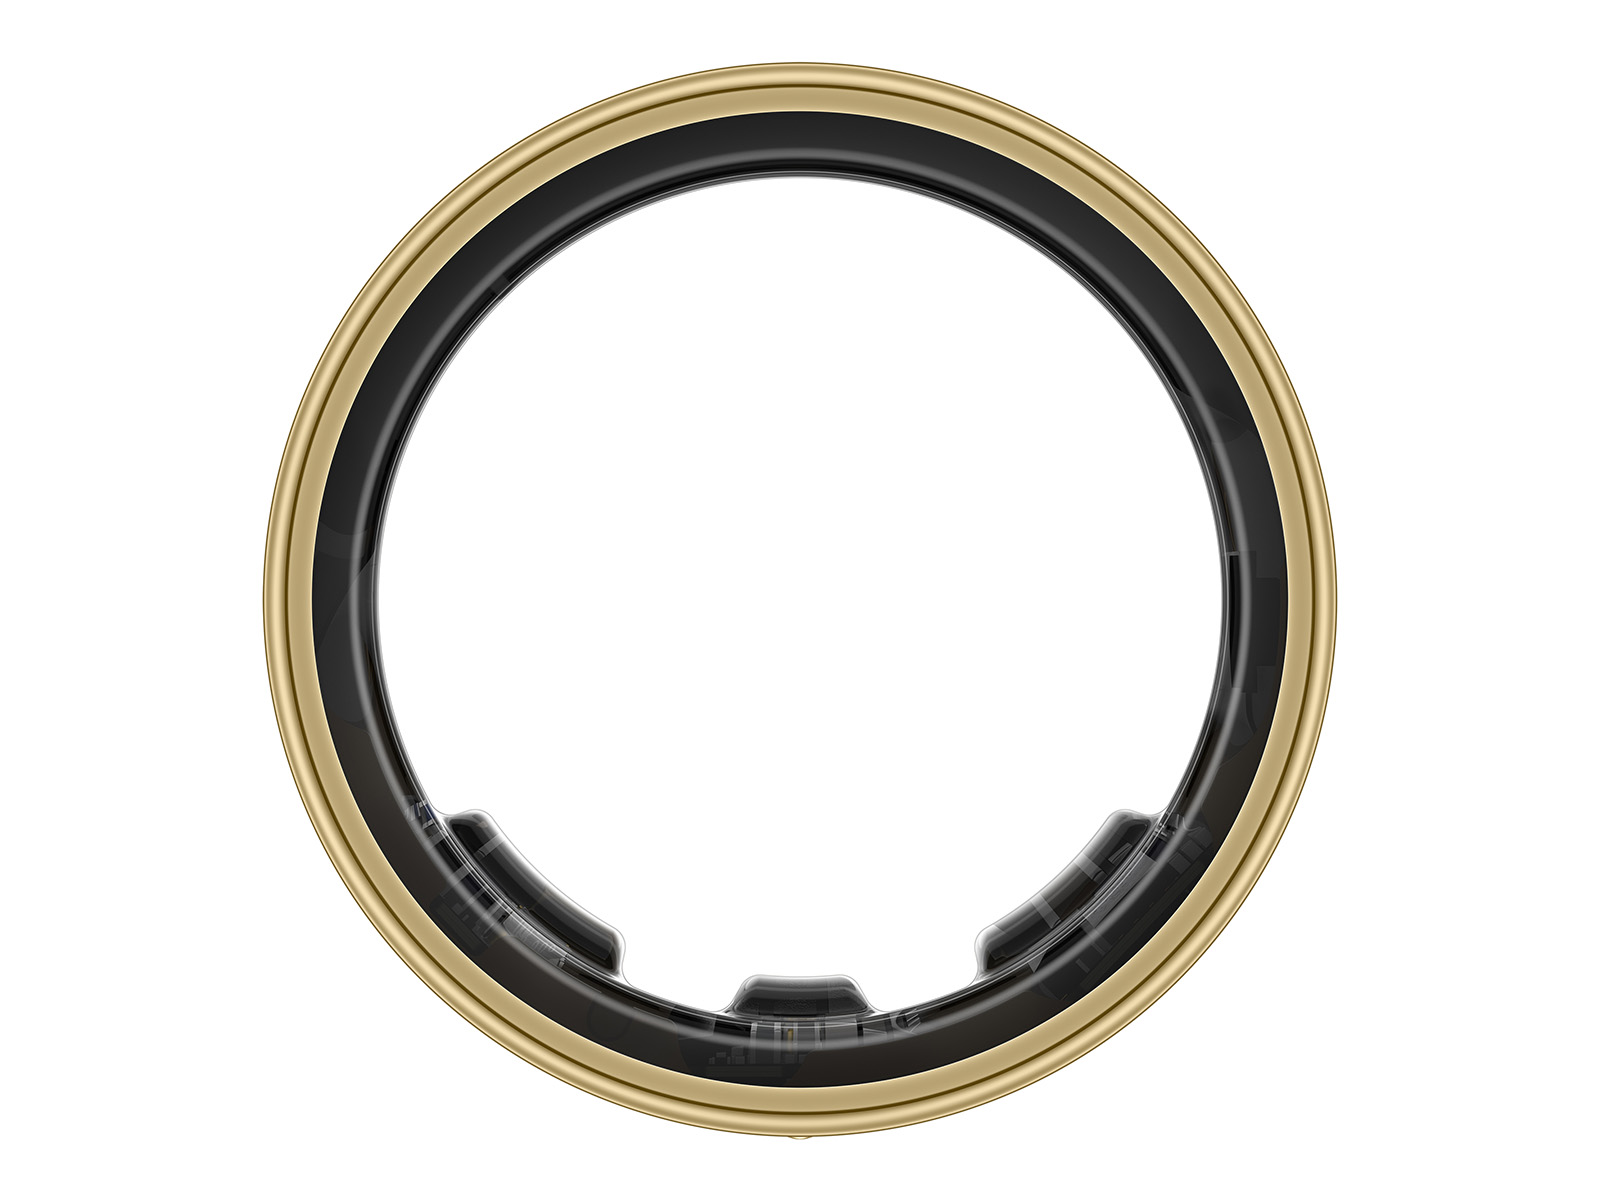 Thumbnail image of Galaxy Ring, Size 9, Titanium Gold